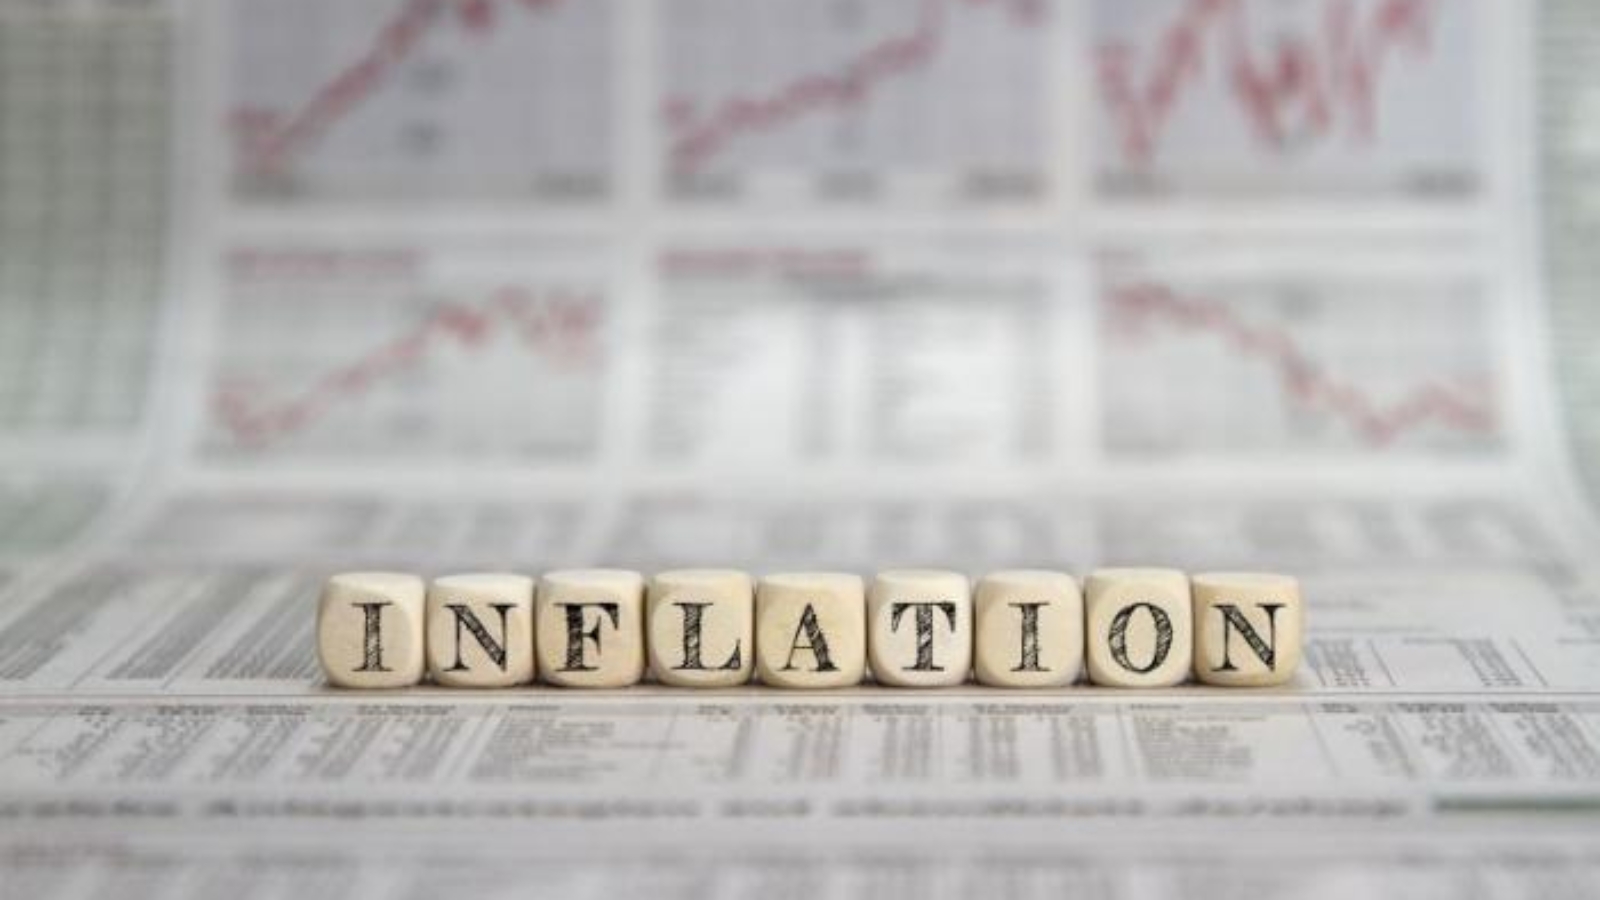 inflasi